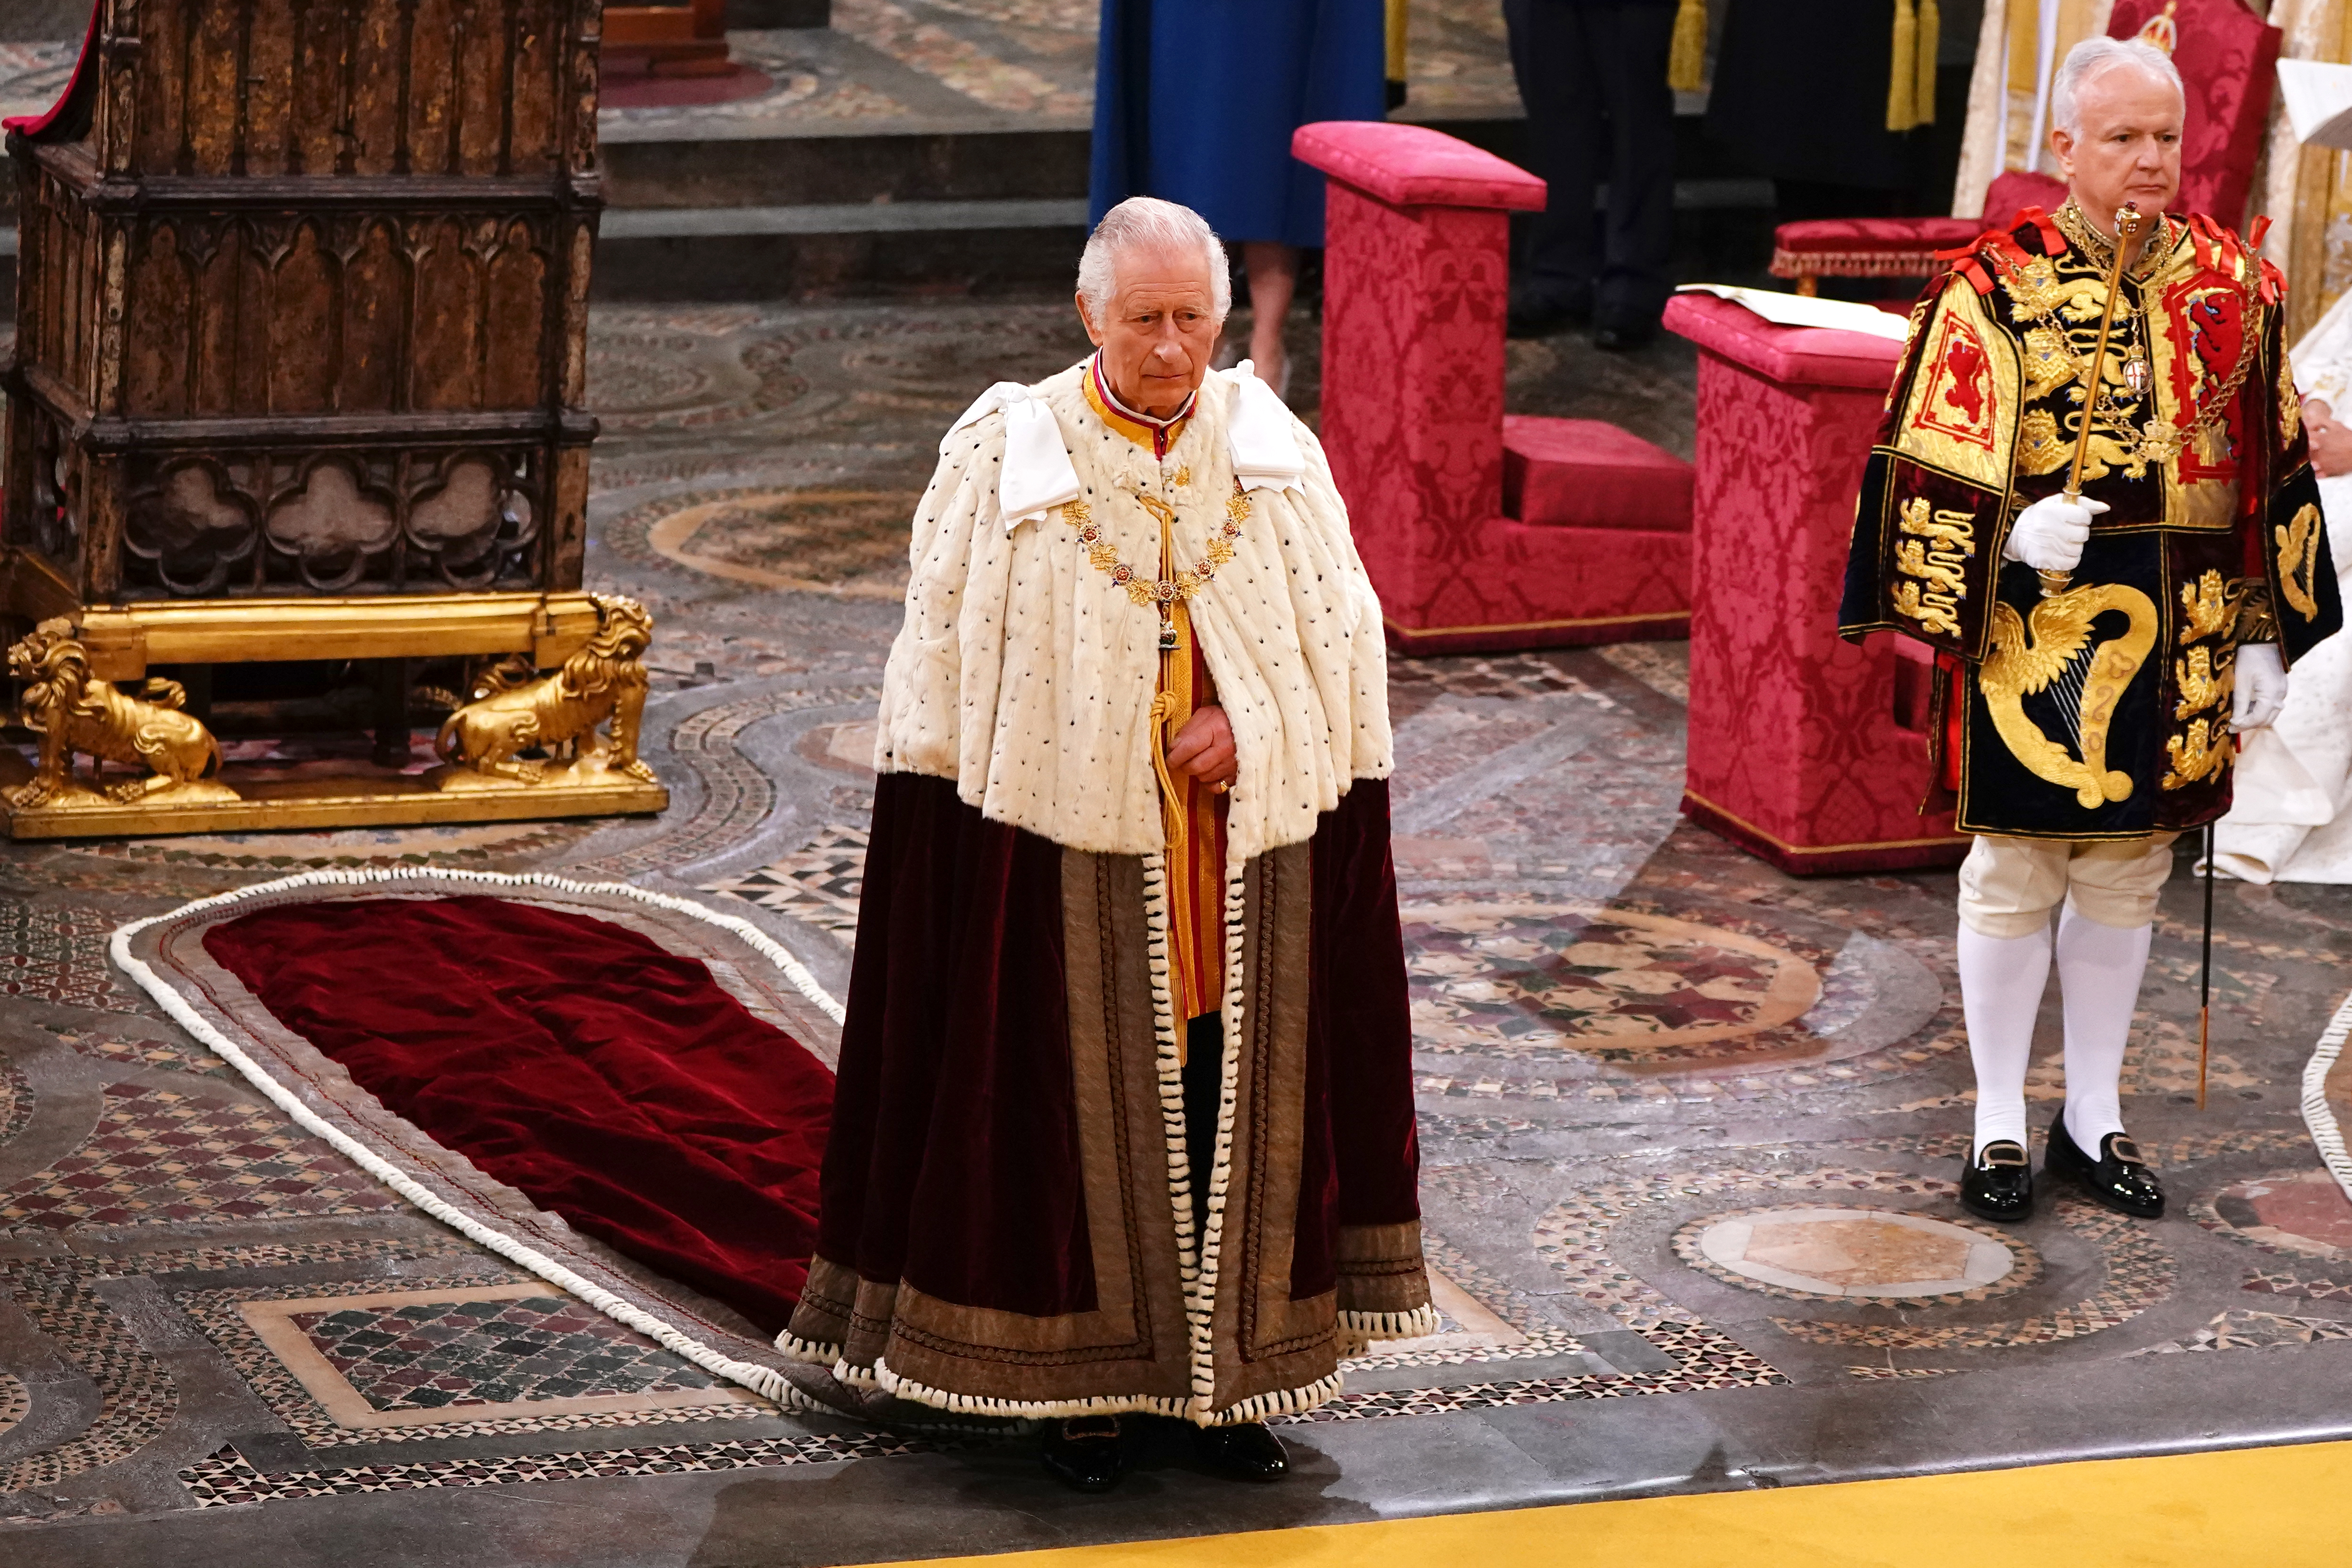 Charles during his coronation